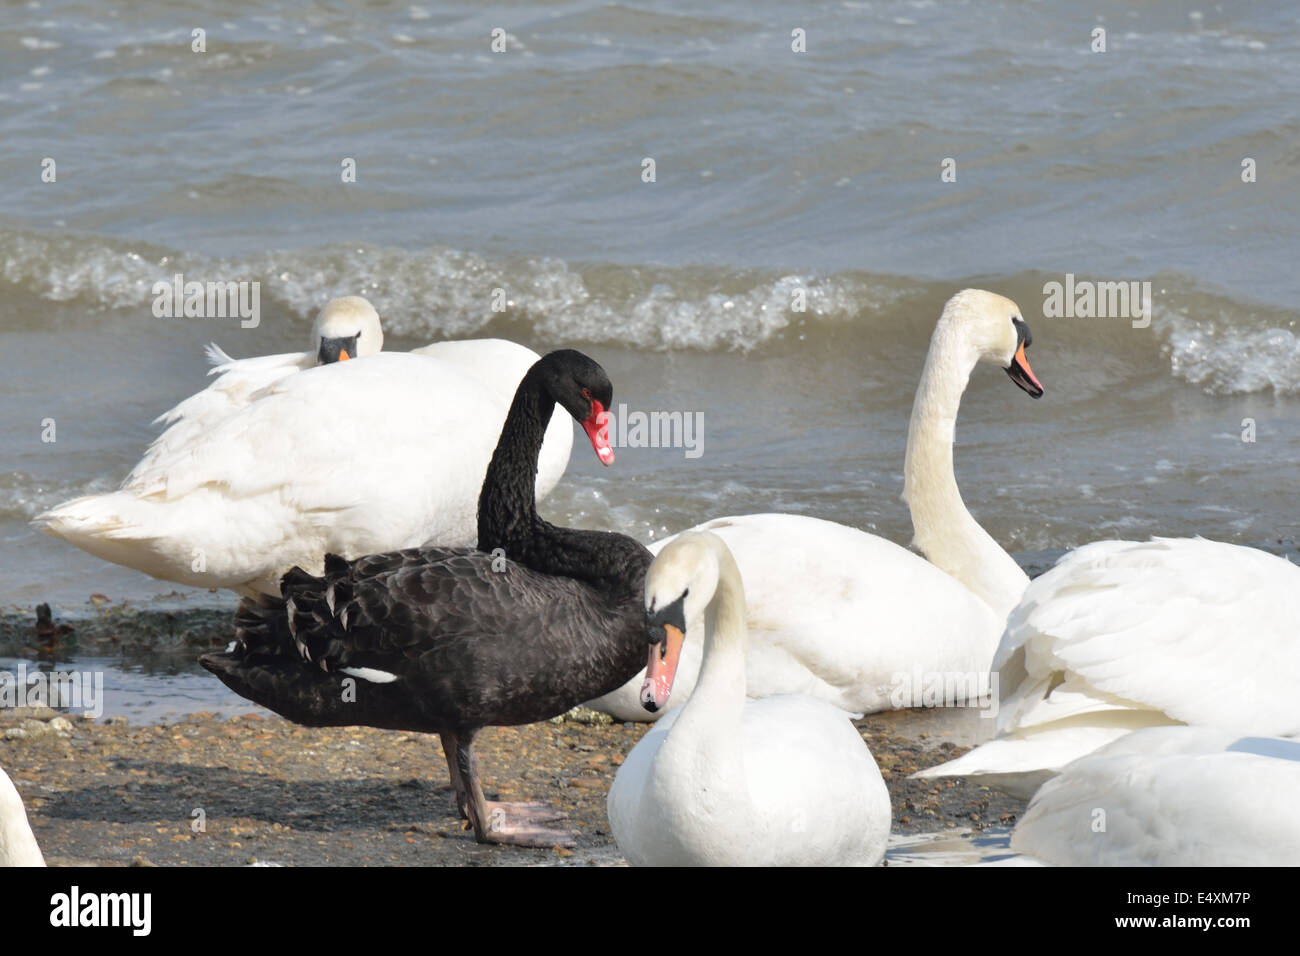 Black swan with whites Stock Photo